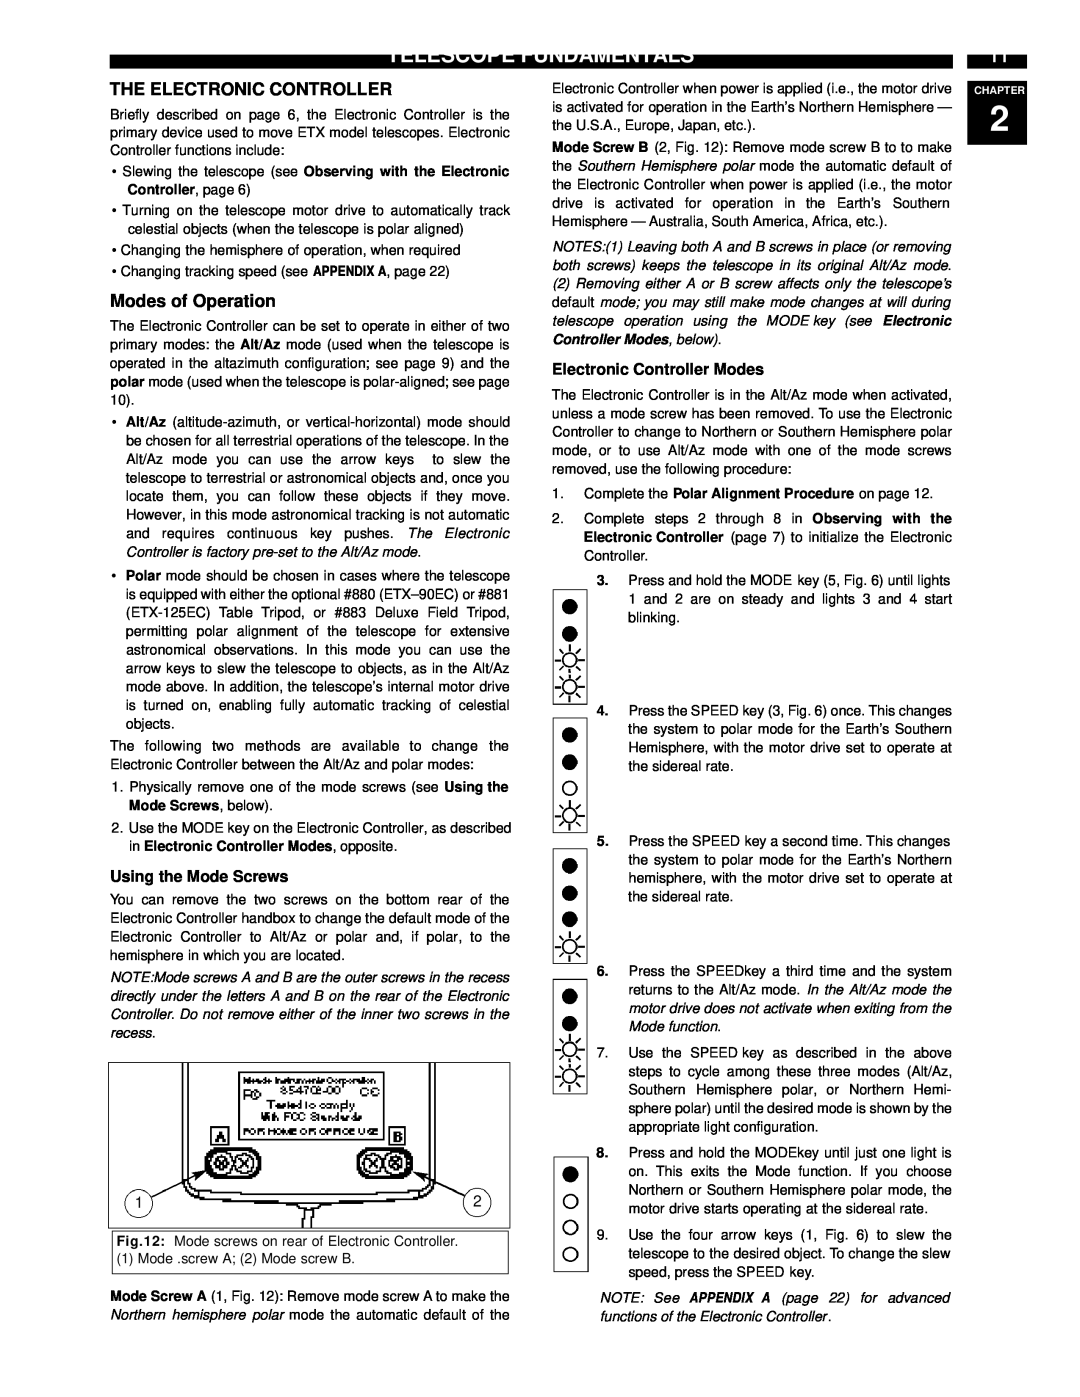 Meade ETX-90EC instruction manual TELESCOPE FUNDAMENTALSz, The Electronic Controller, Modes of Operation 